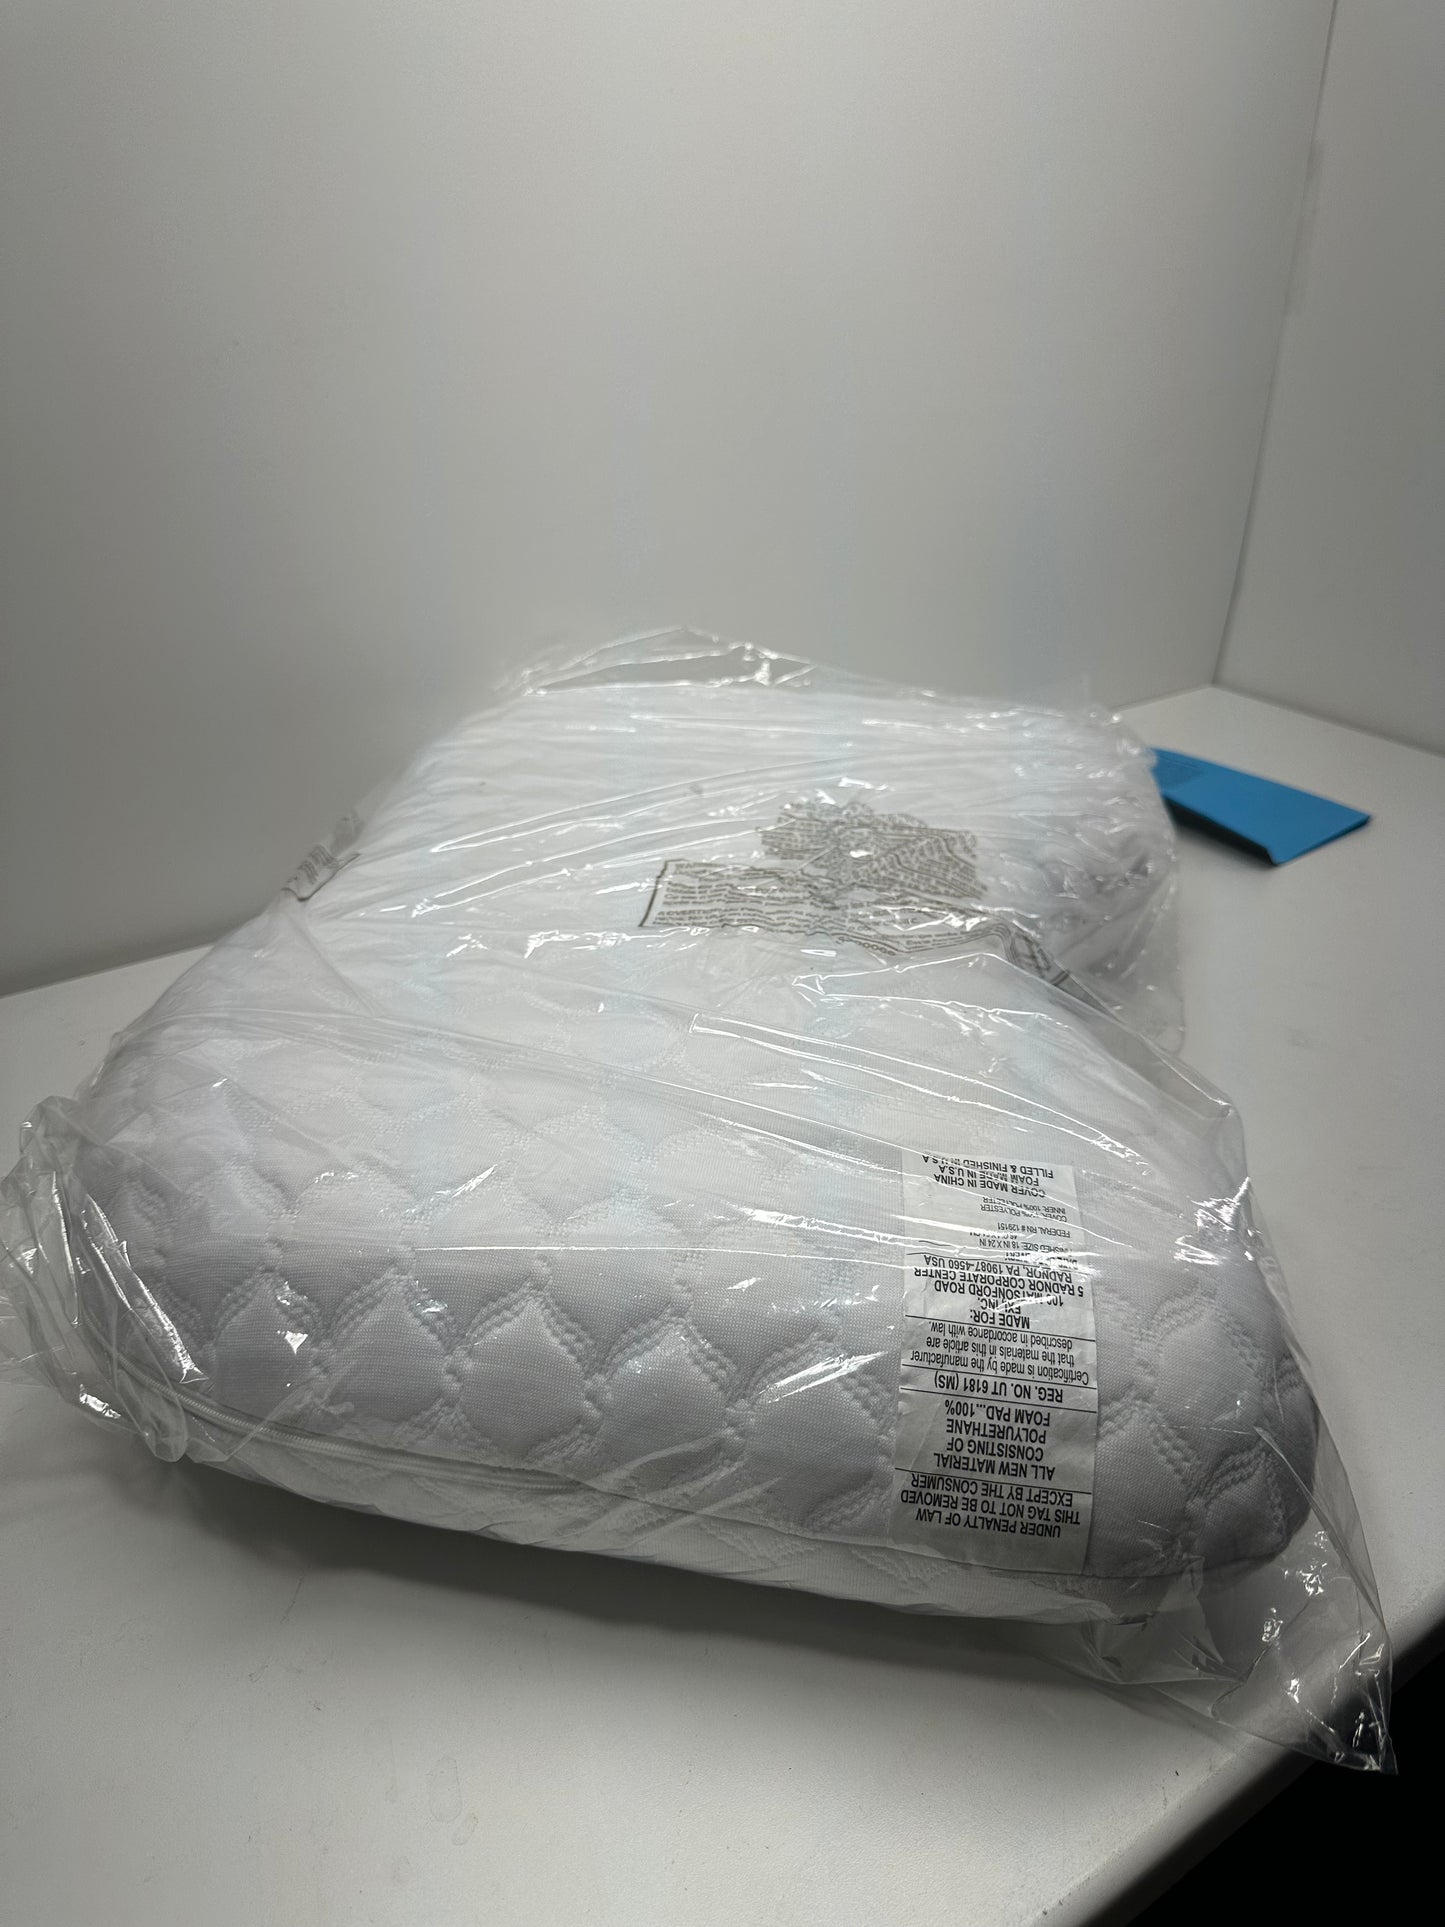 Sleep Innovations - Versacurve Multi-Position Gel Memory Foam Pillow - White